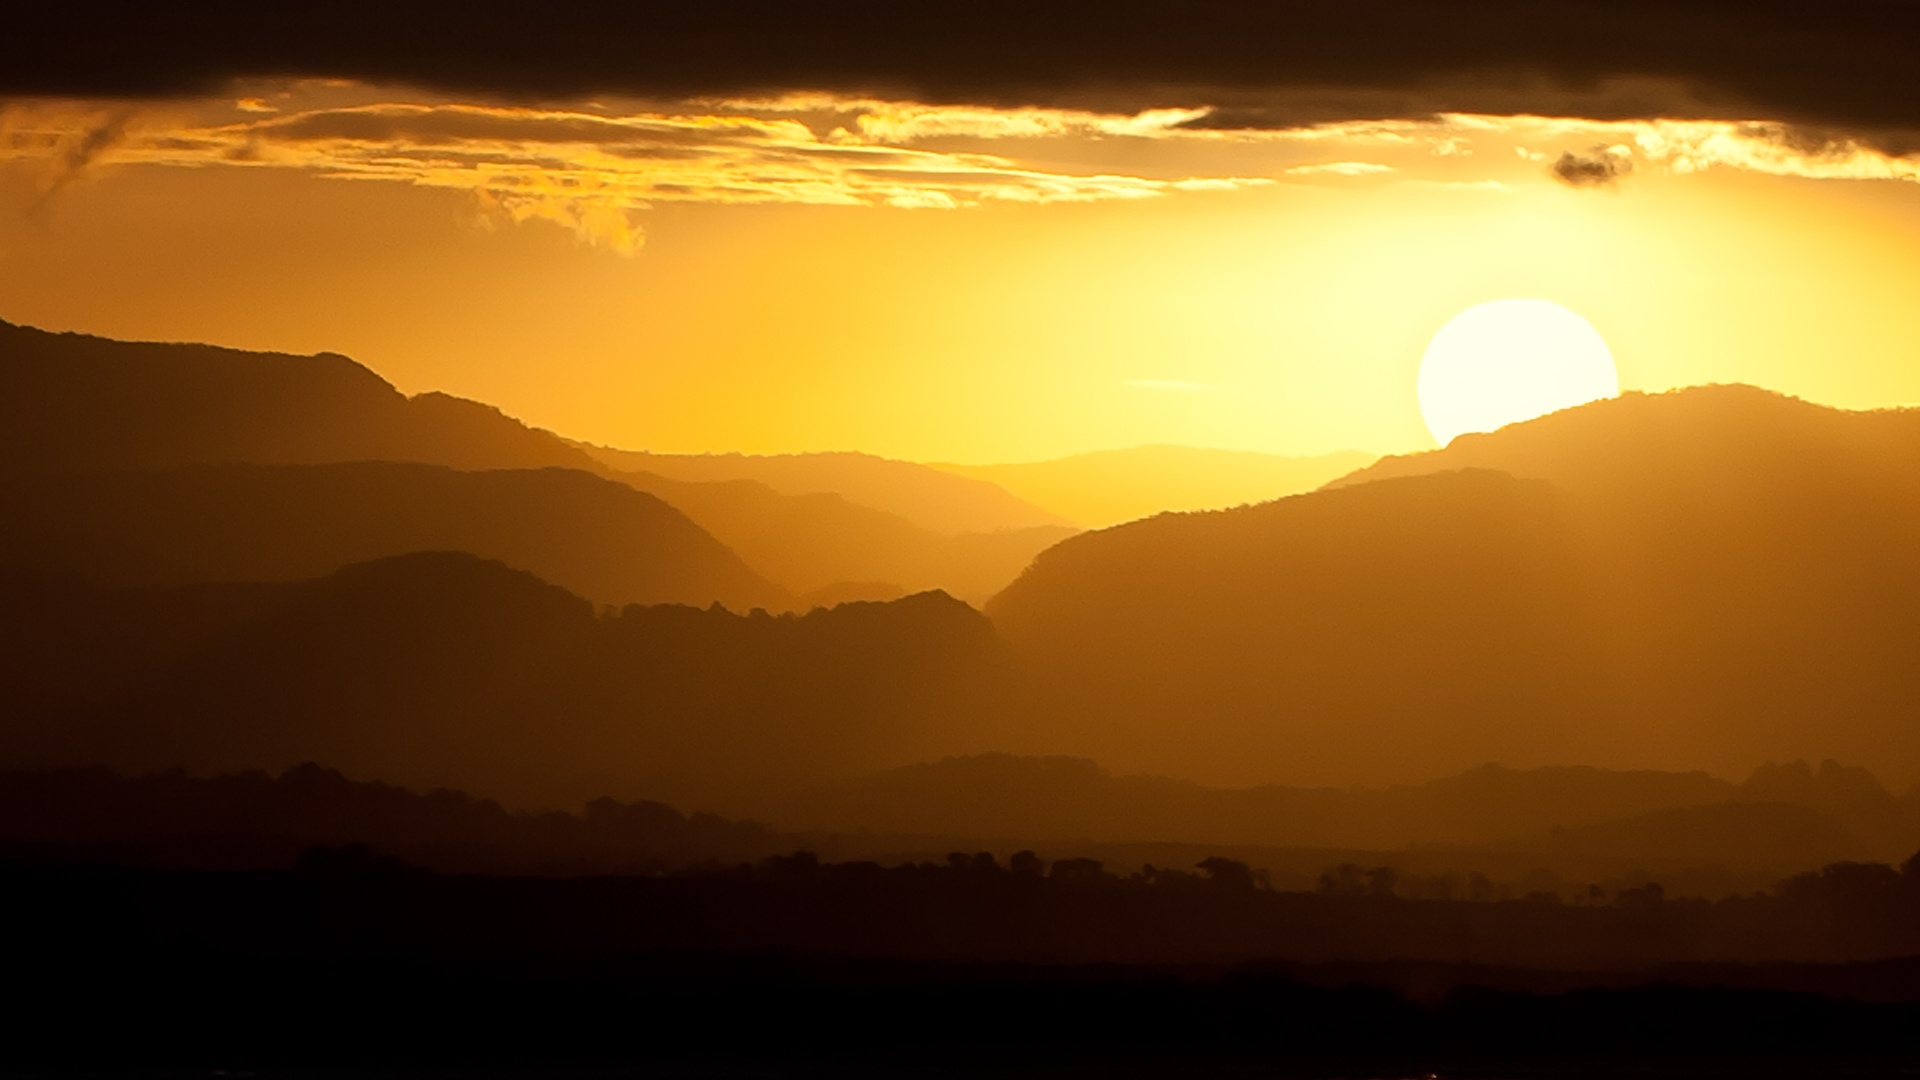 Sunset 4K Wallpaper, Landscape, Mountains, Yellow sky, Silhouette